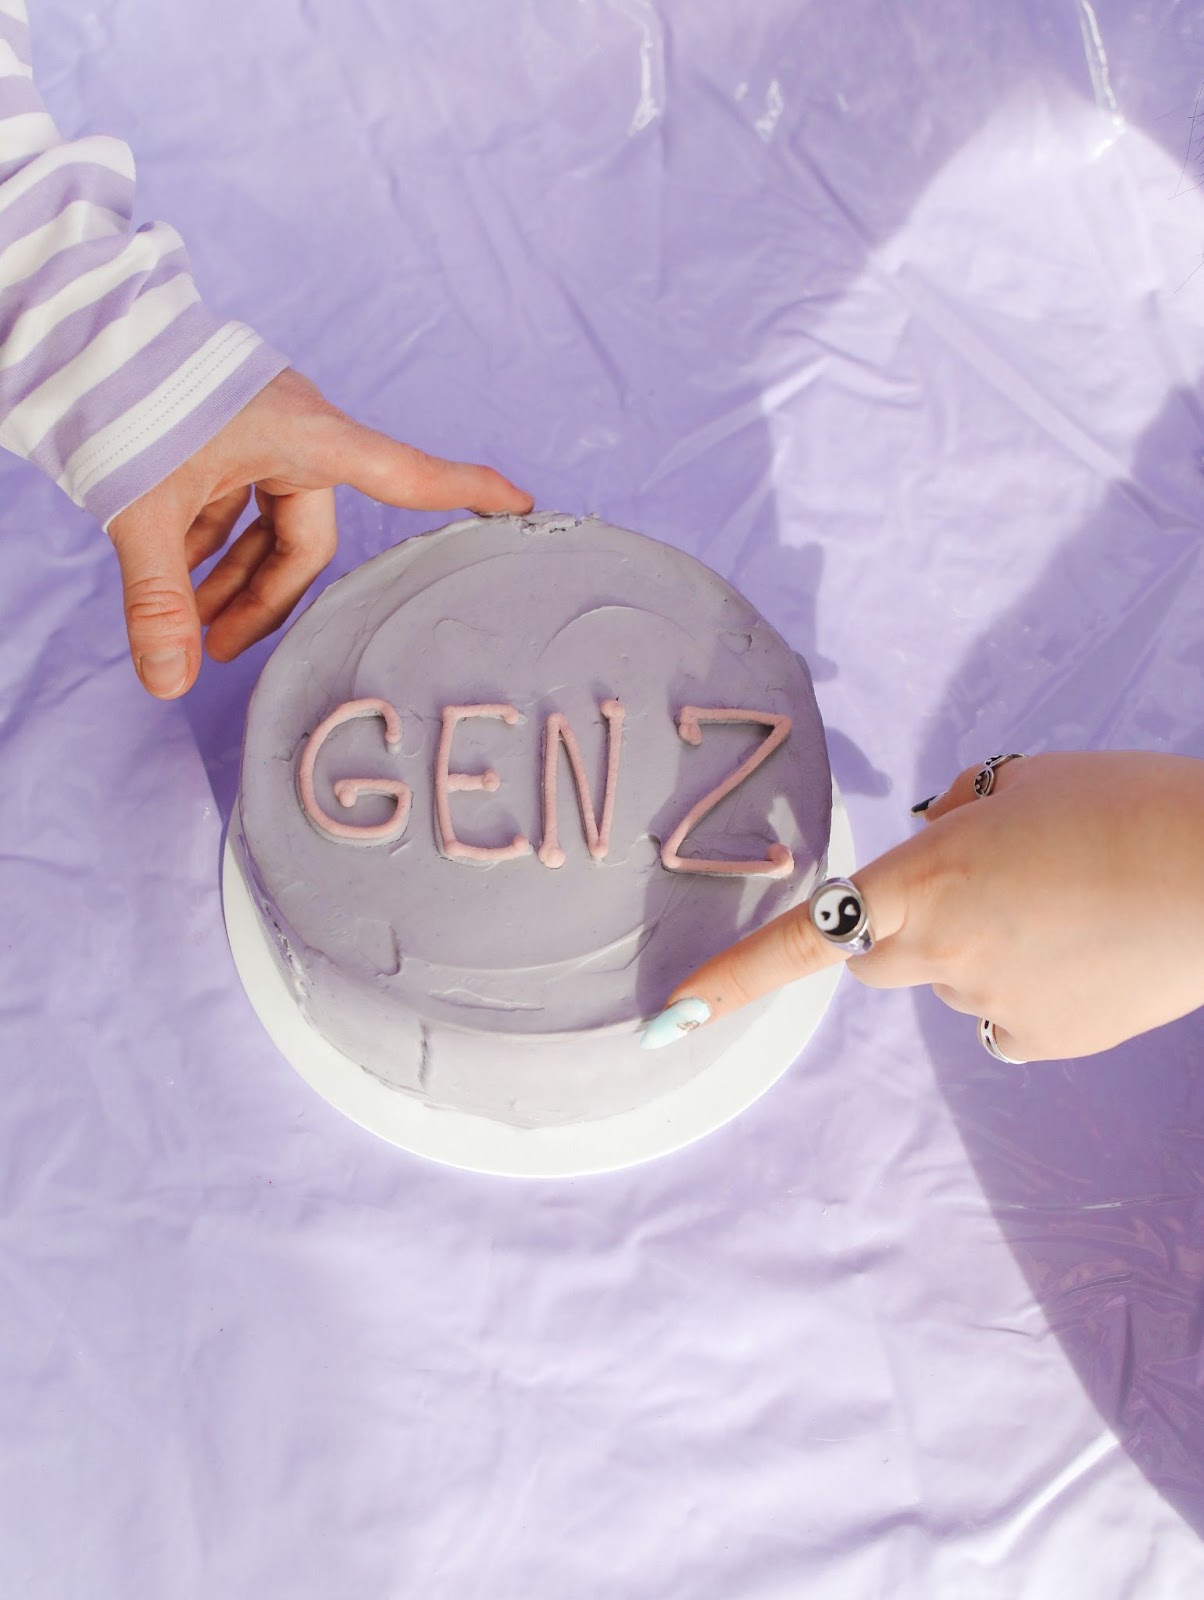 lavender cake with "Gen Z" written in icing